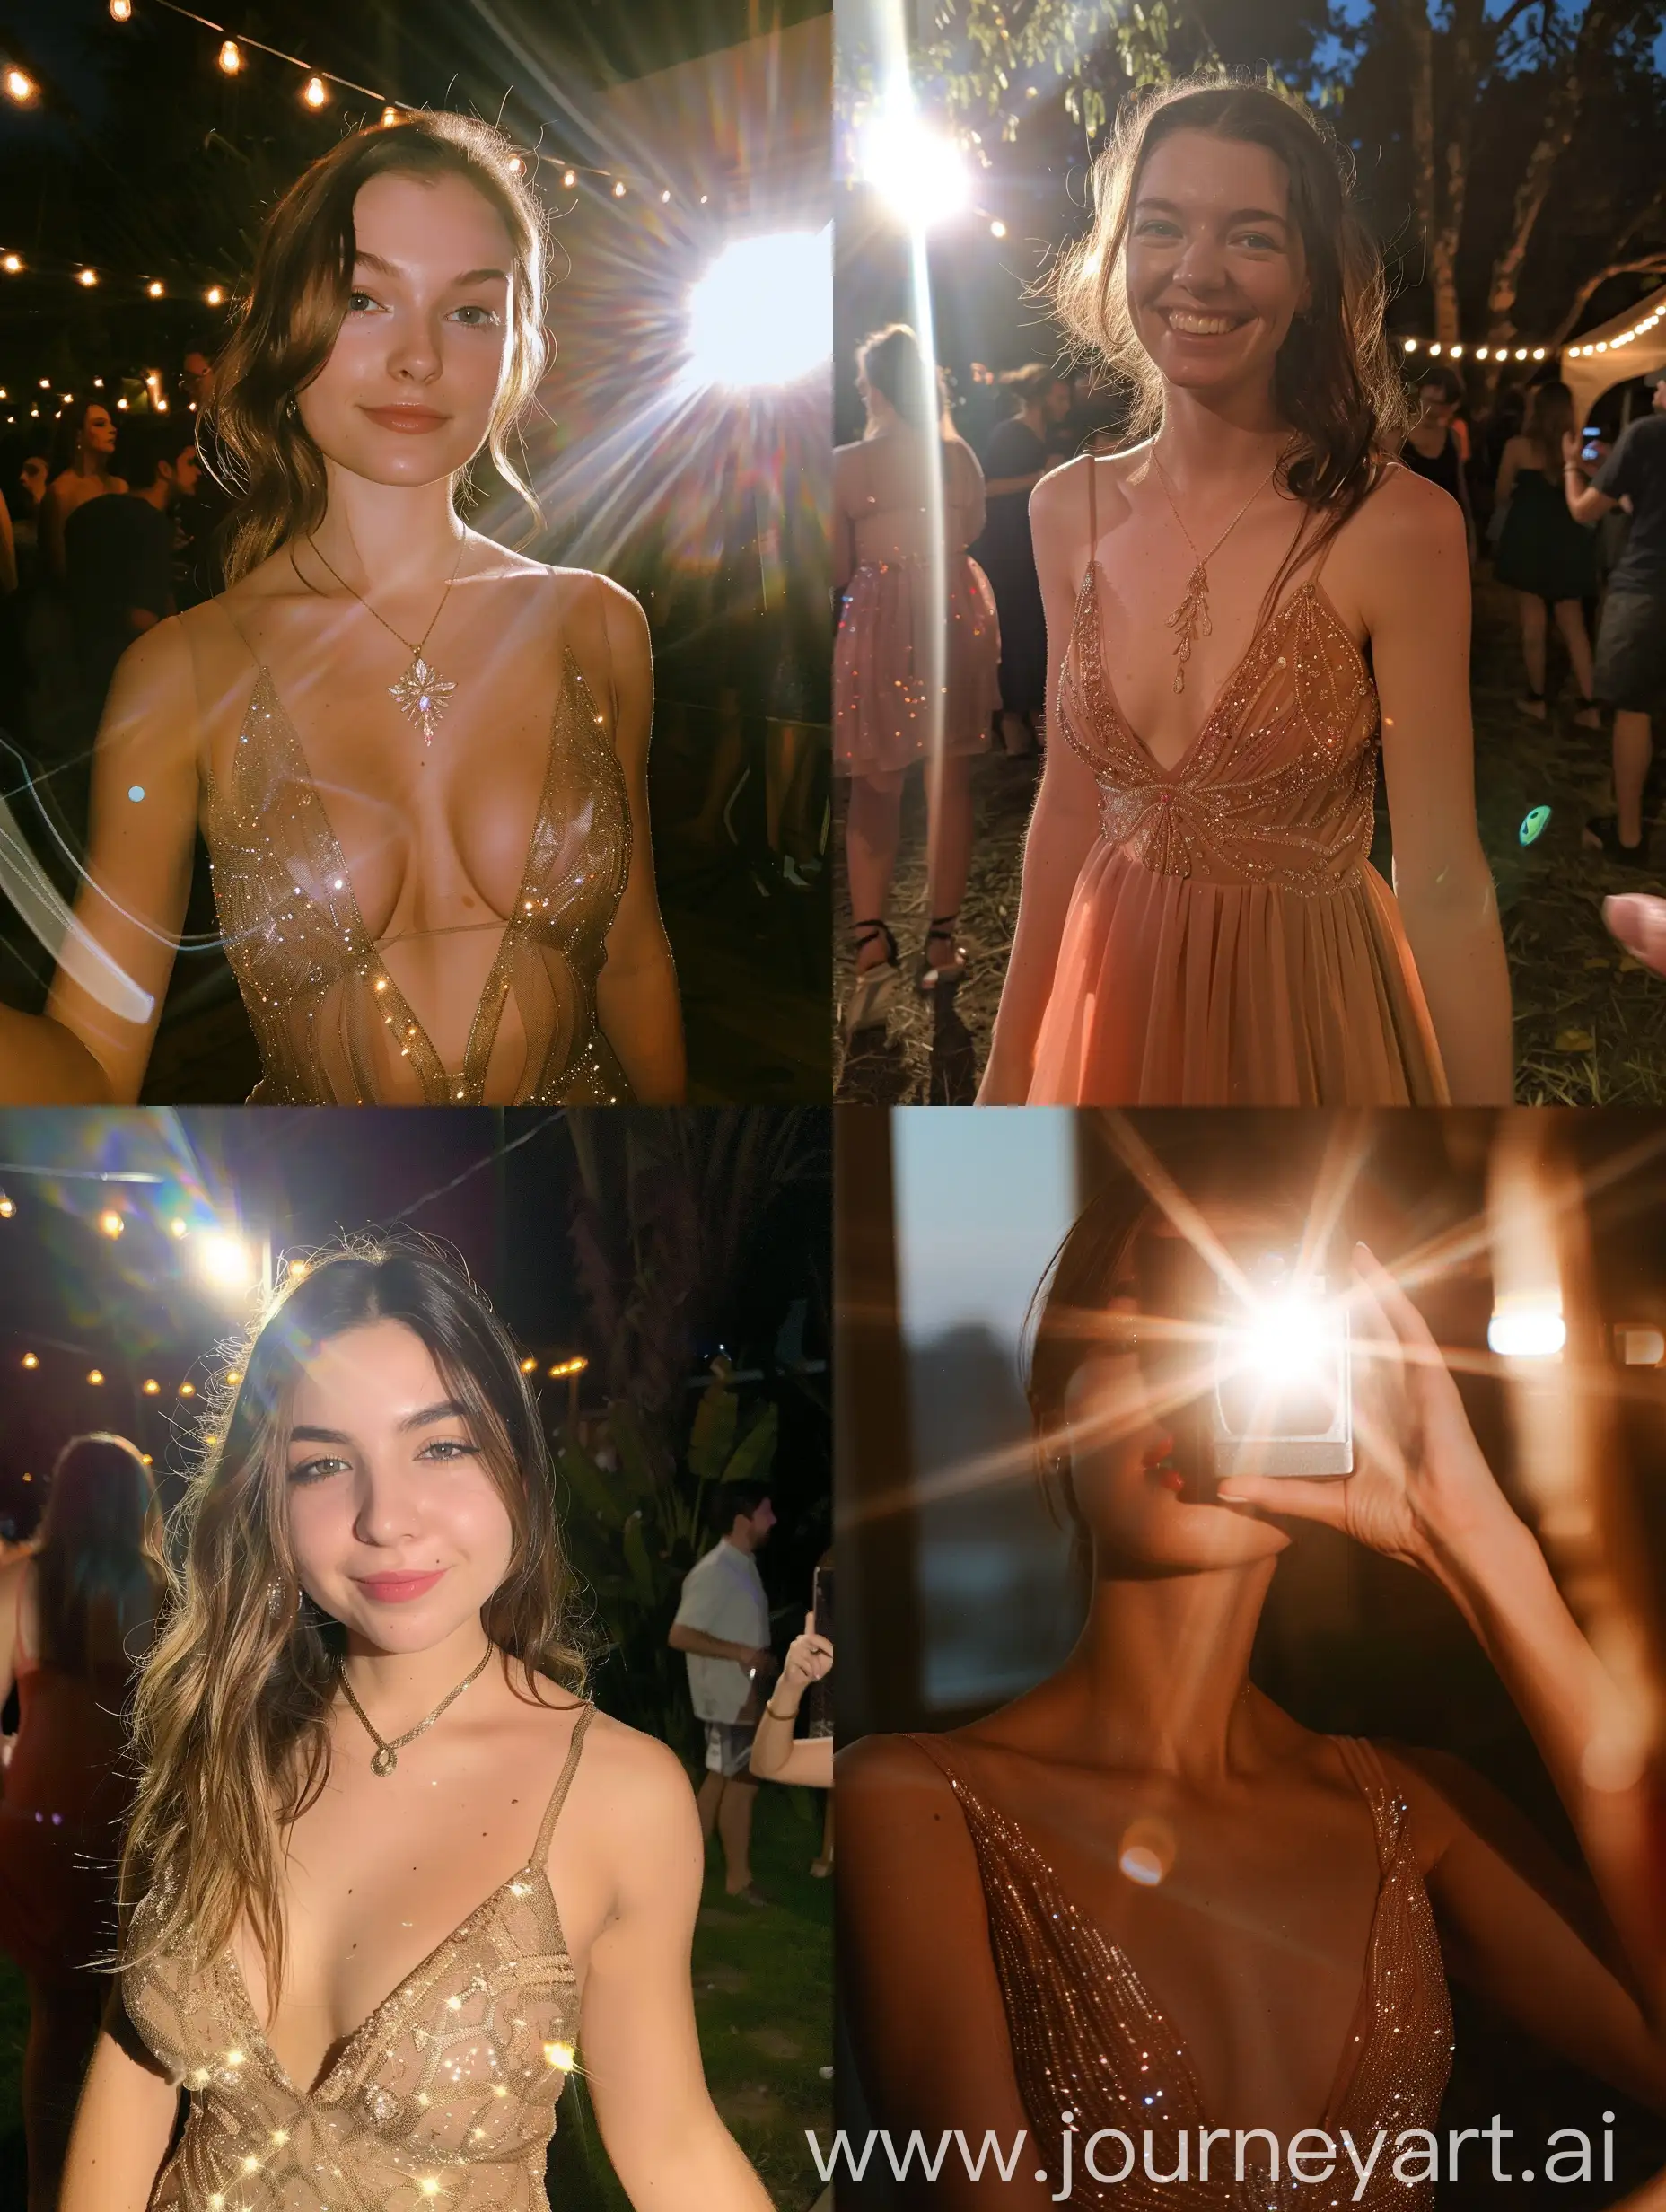 Night-Party-Selfie-Glamorous-Dress-and-Flashlights